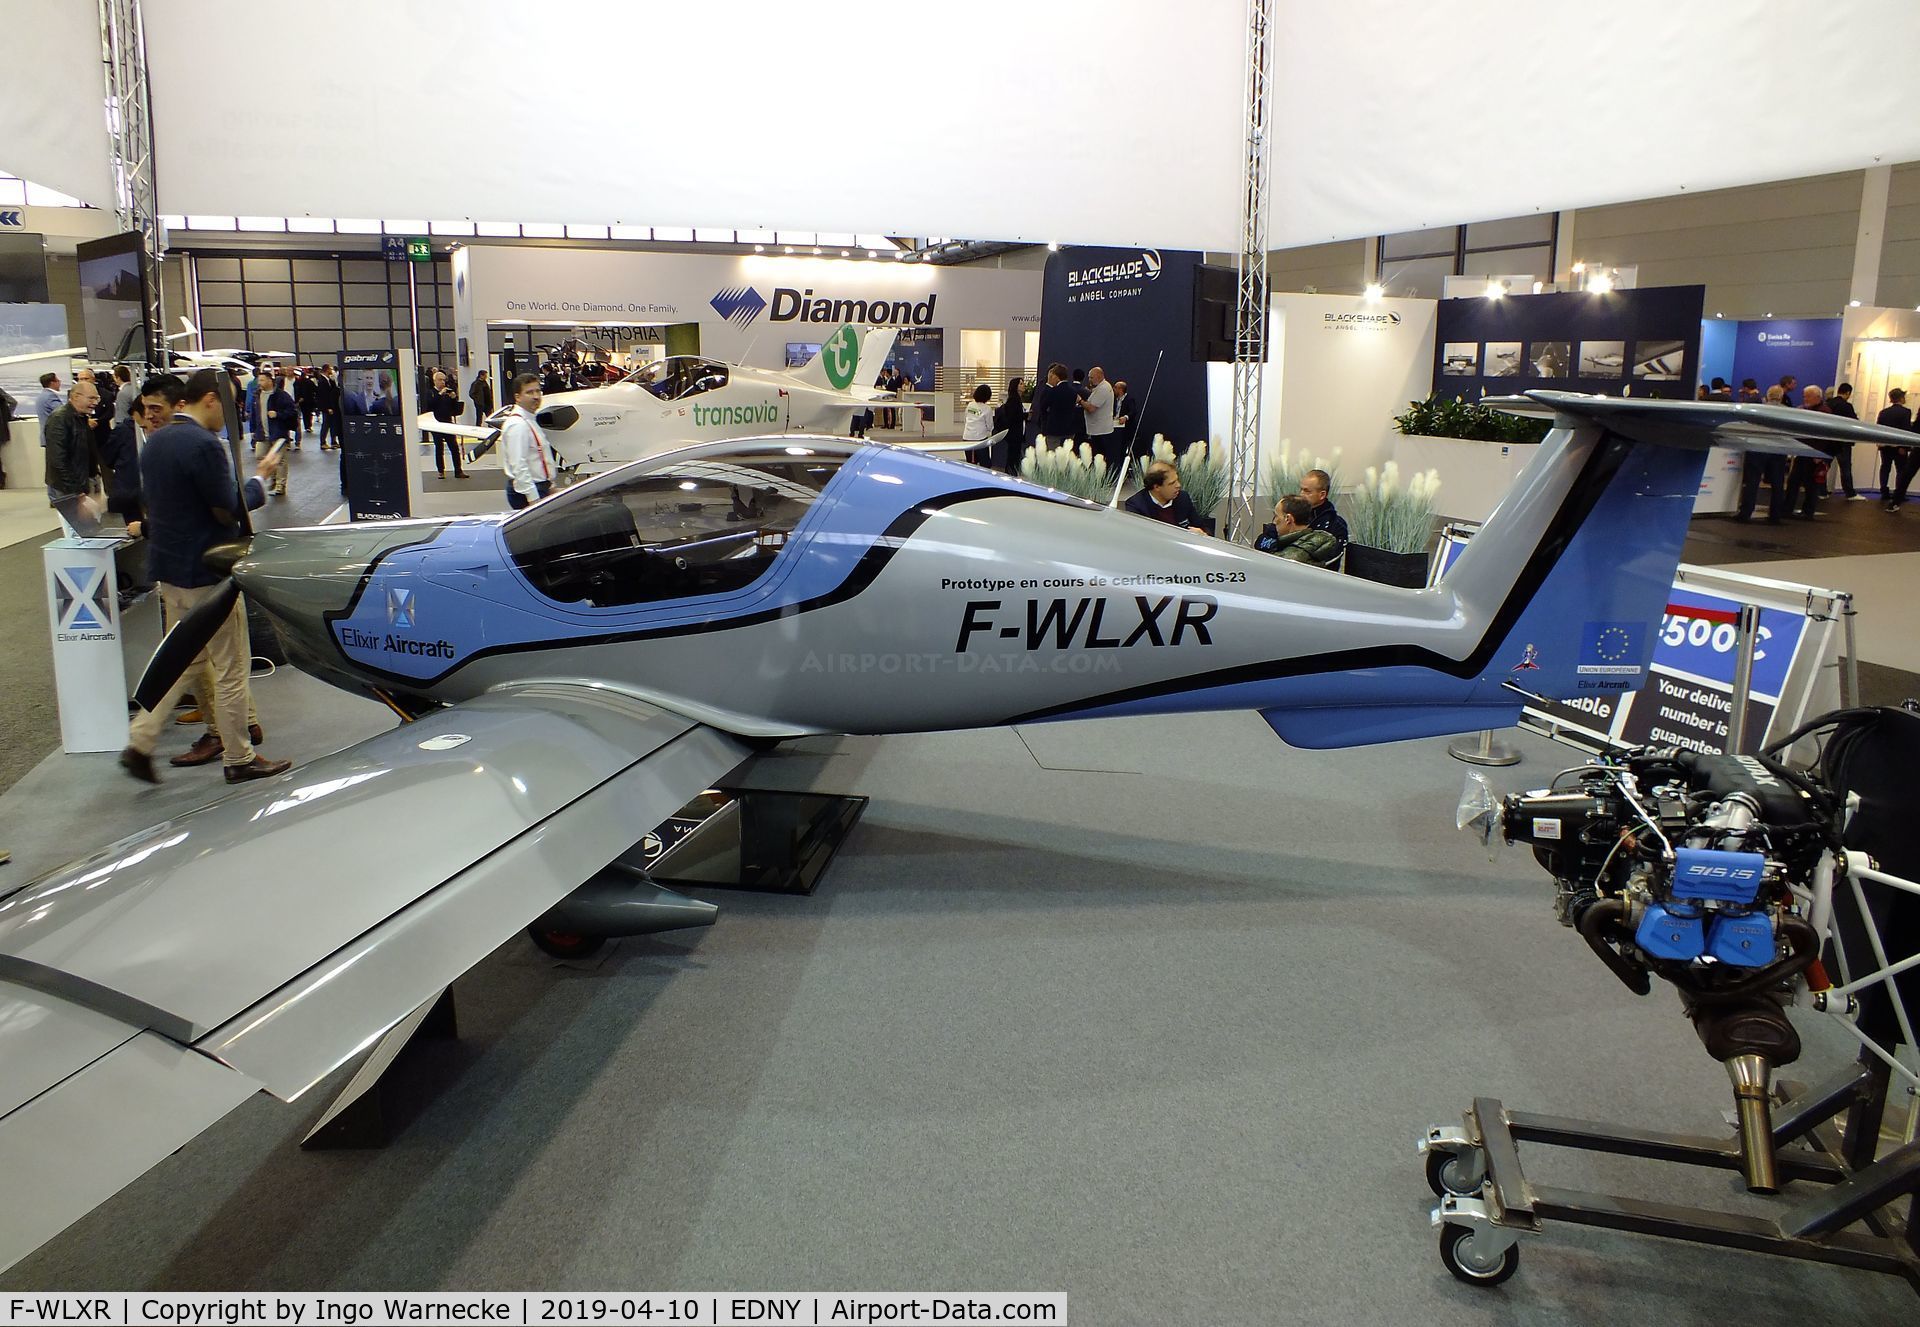 F-WLXR, 2017 Elixir Aircraft Elixir C/N Not found F-WLXR, Elixir Aircraft Elixir at the AERO 2019, Friedrichshafen